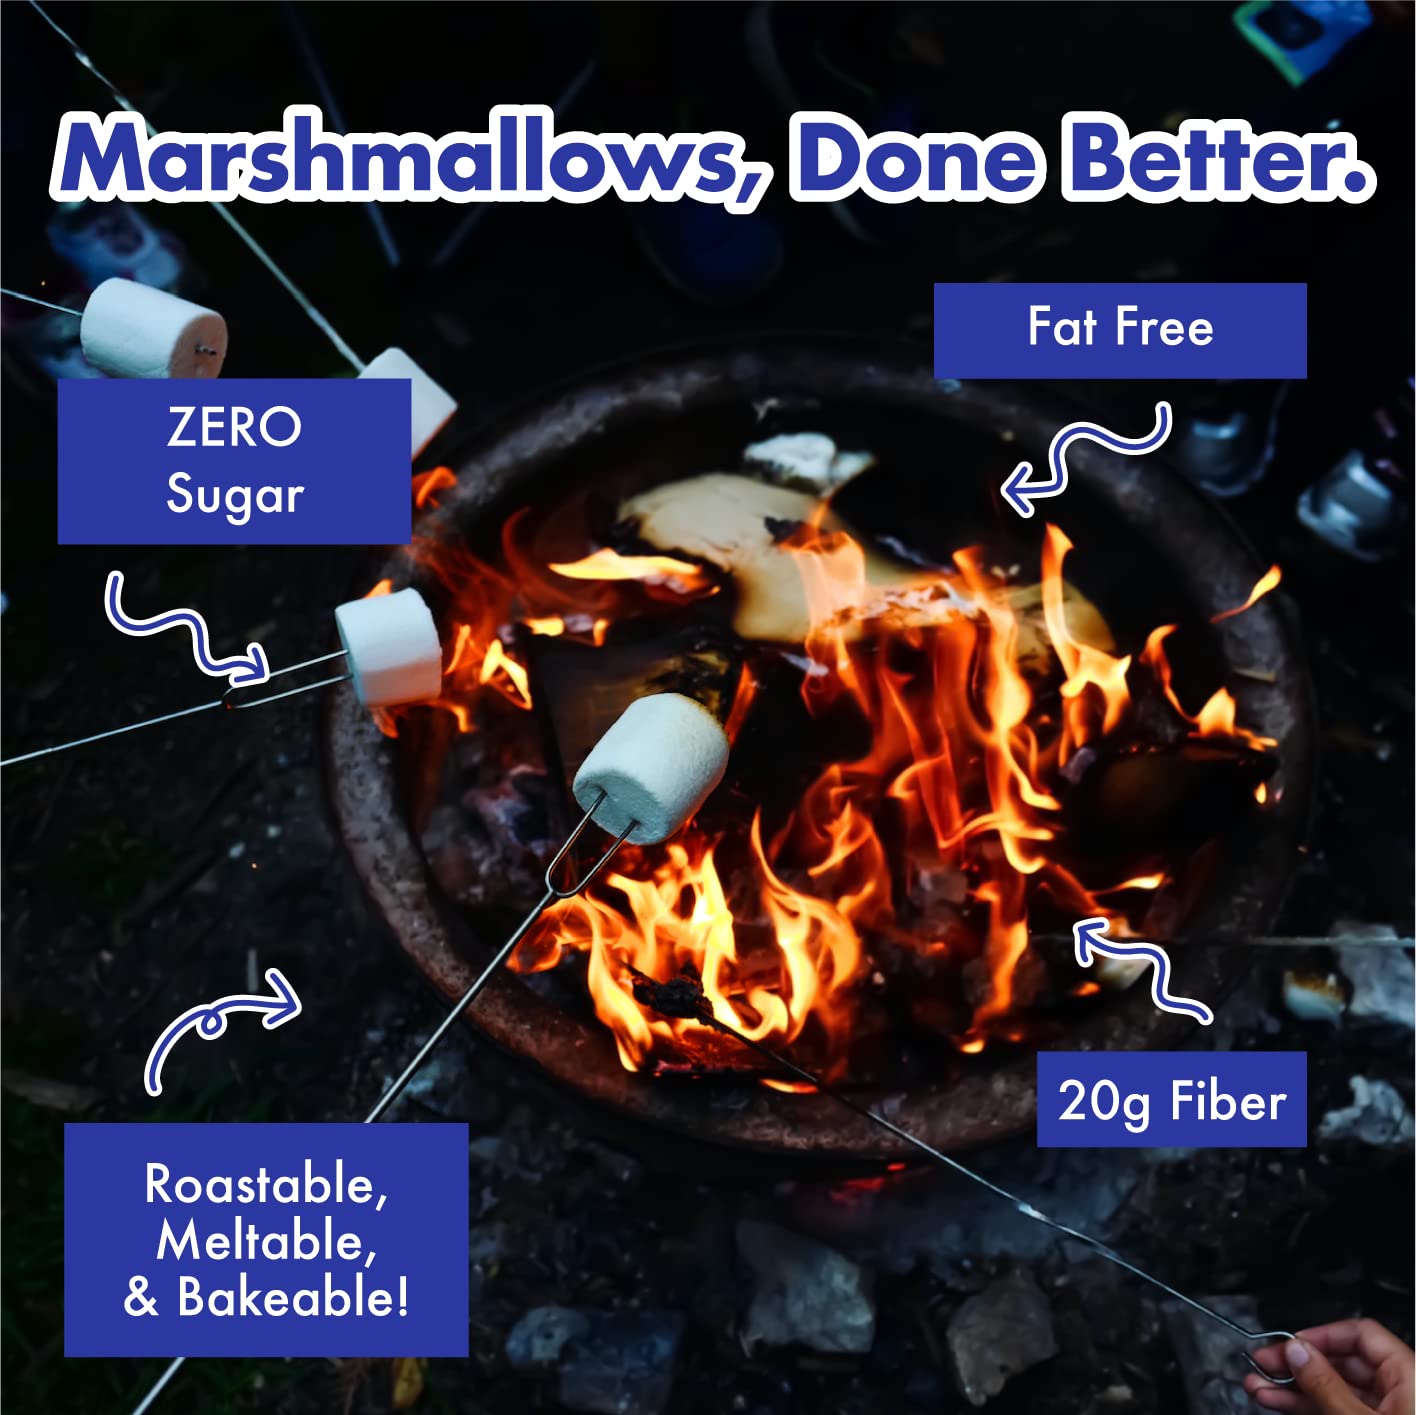 ChocZero Sugar Free Marshmallows - Keto Marshmallow - Gluten Free, 0g Fat, Zero Sugars - Healthy Low Carb - 10.5 Ounce Bag